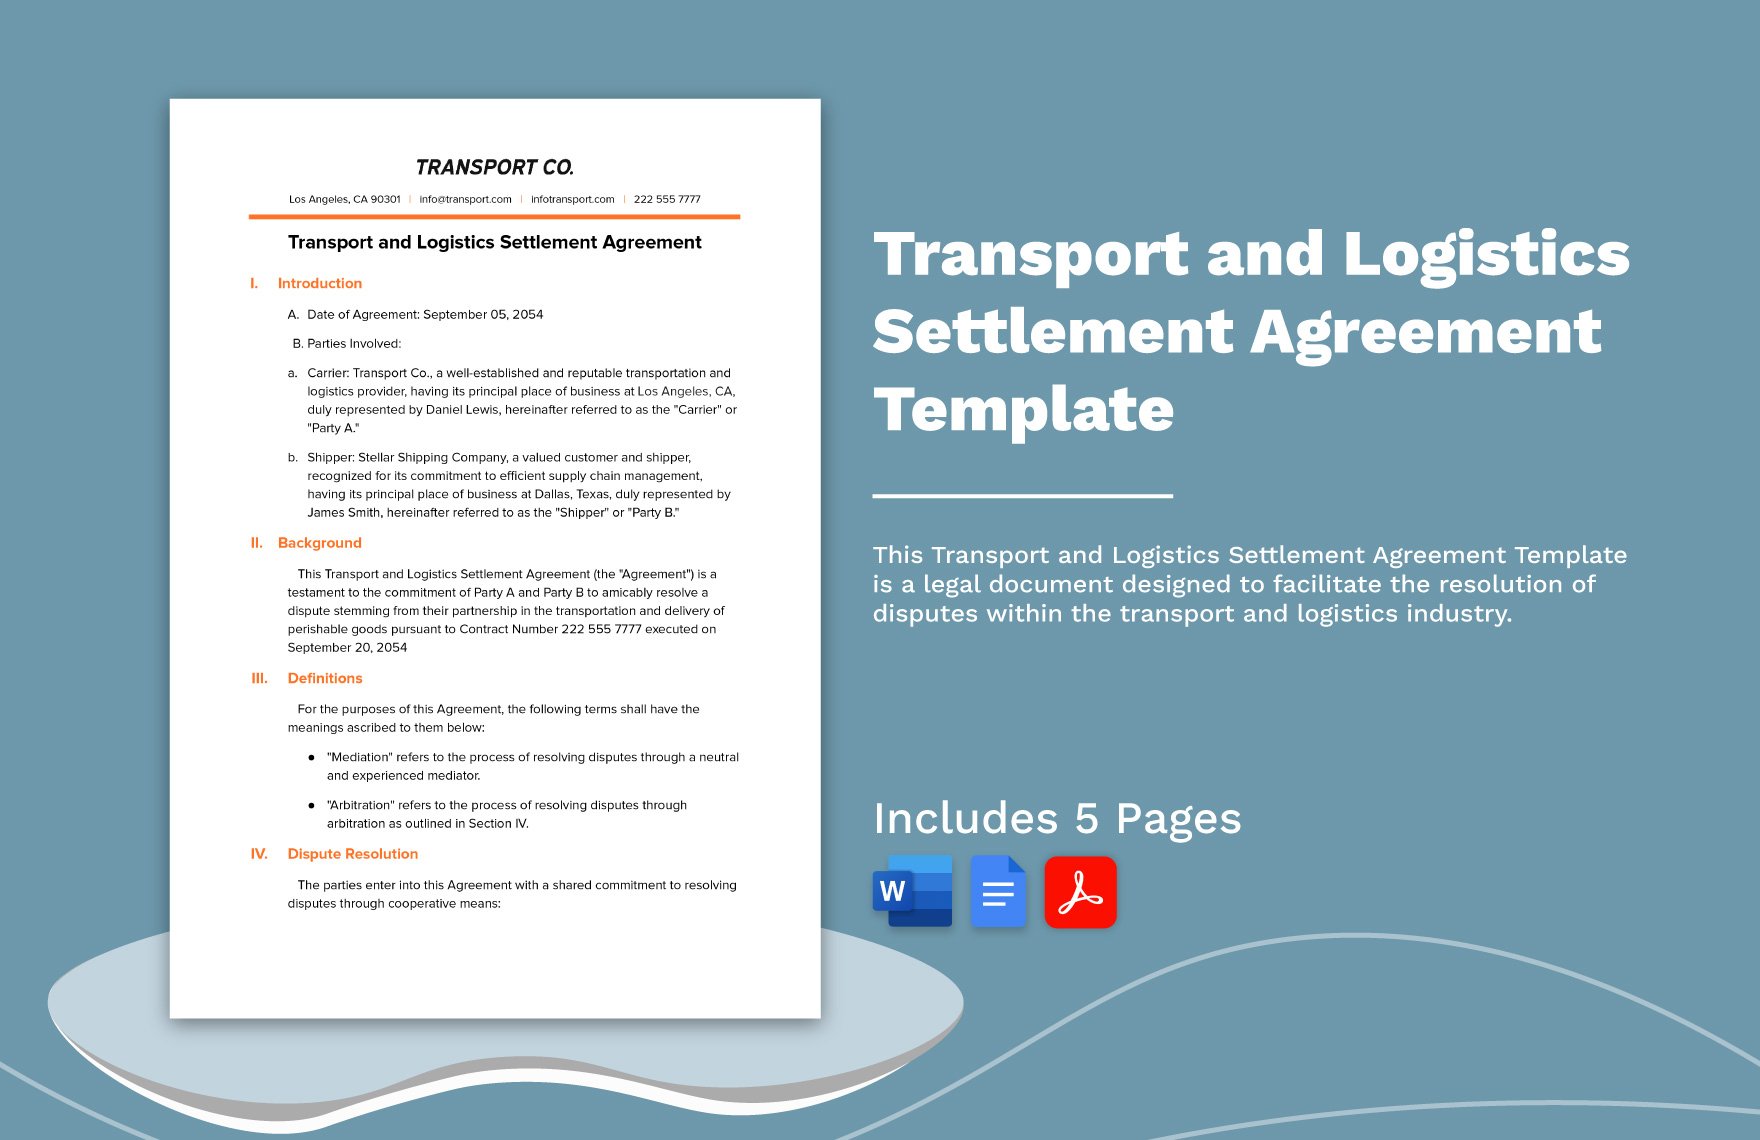 Transport and Logistics Settlement Agreement Template